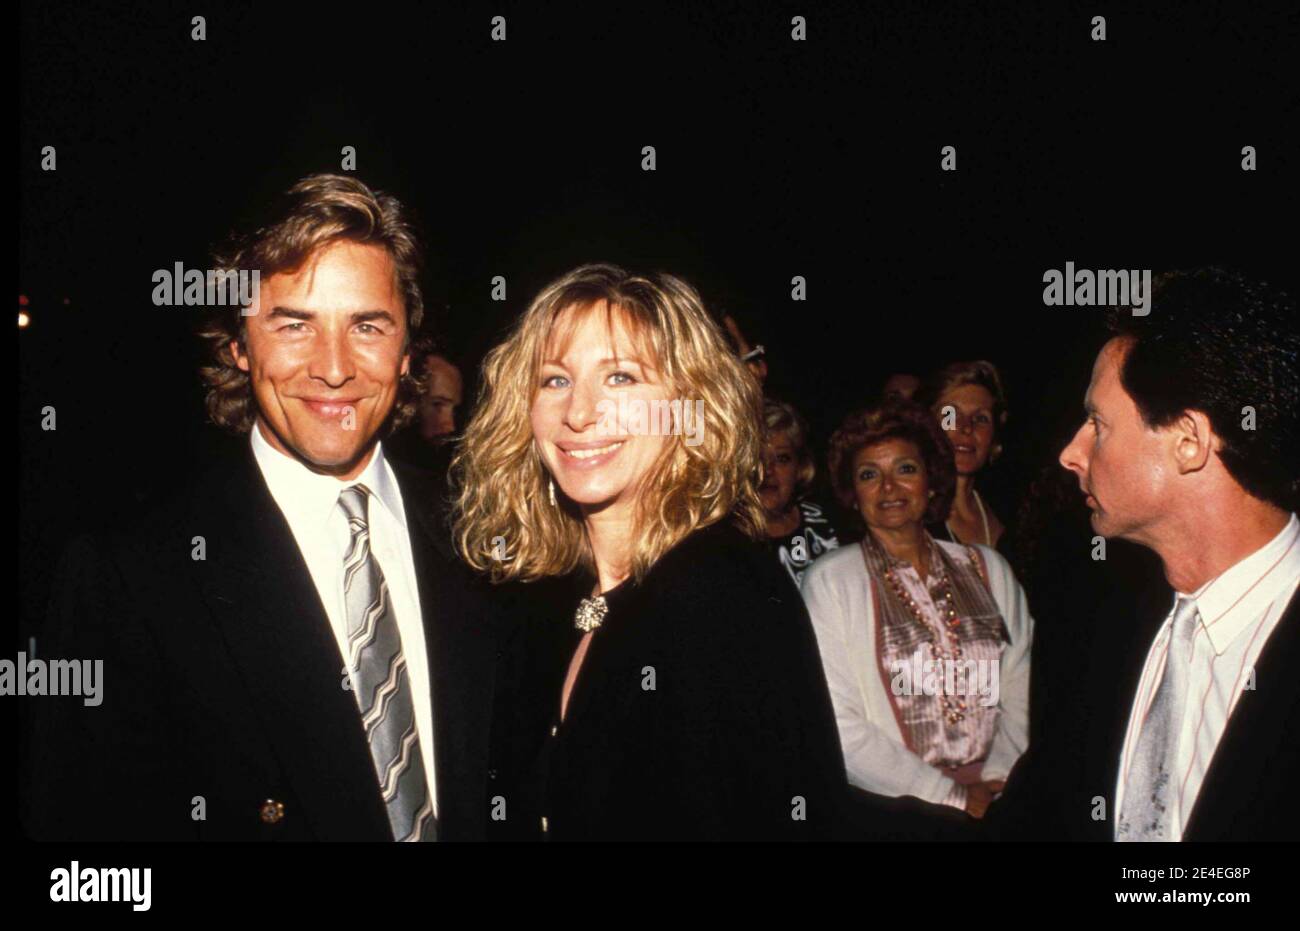 Don Johnson And Barbra Streisand 1988 Credit: Ralph Dominguez/MediaPunch  Stock Photo - Alamy